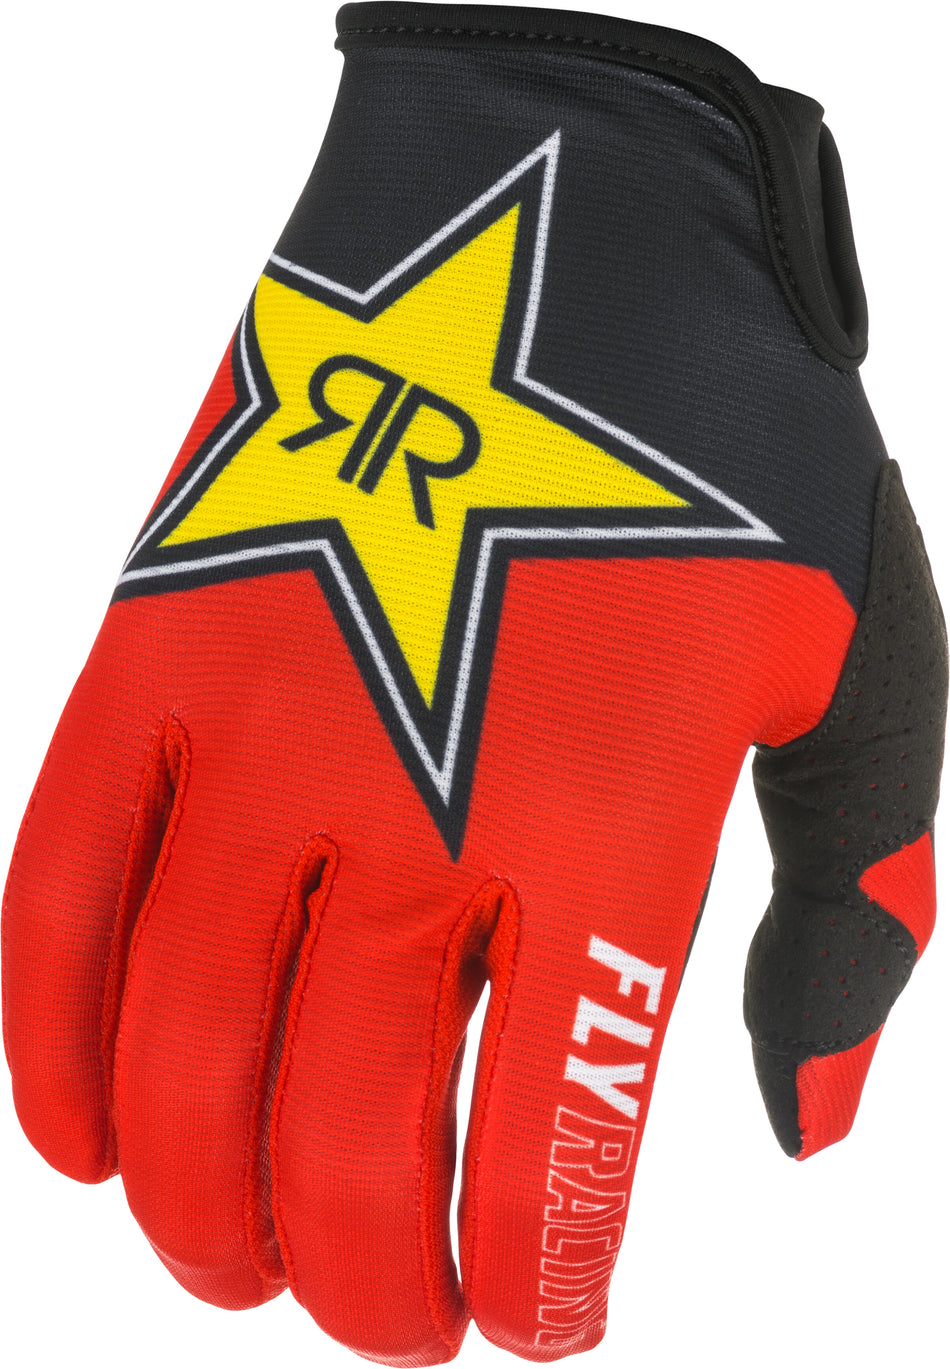 FLY RACING Lite Rockstar Gloves Black/Red/Yellow Sz 09 374-01309